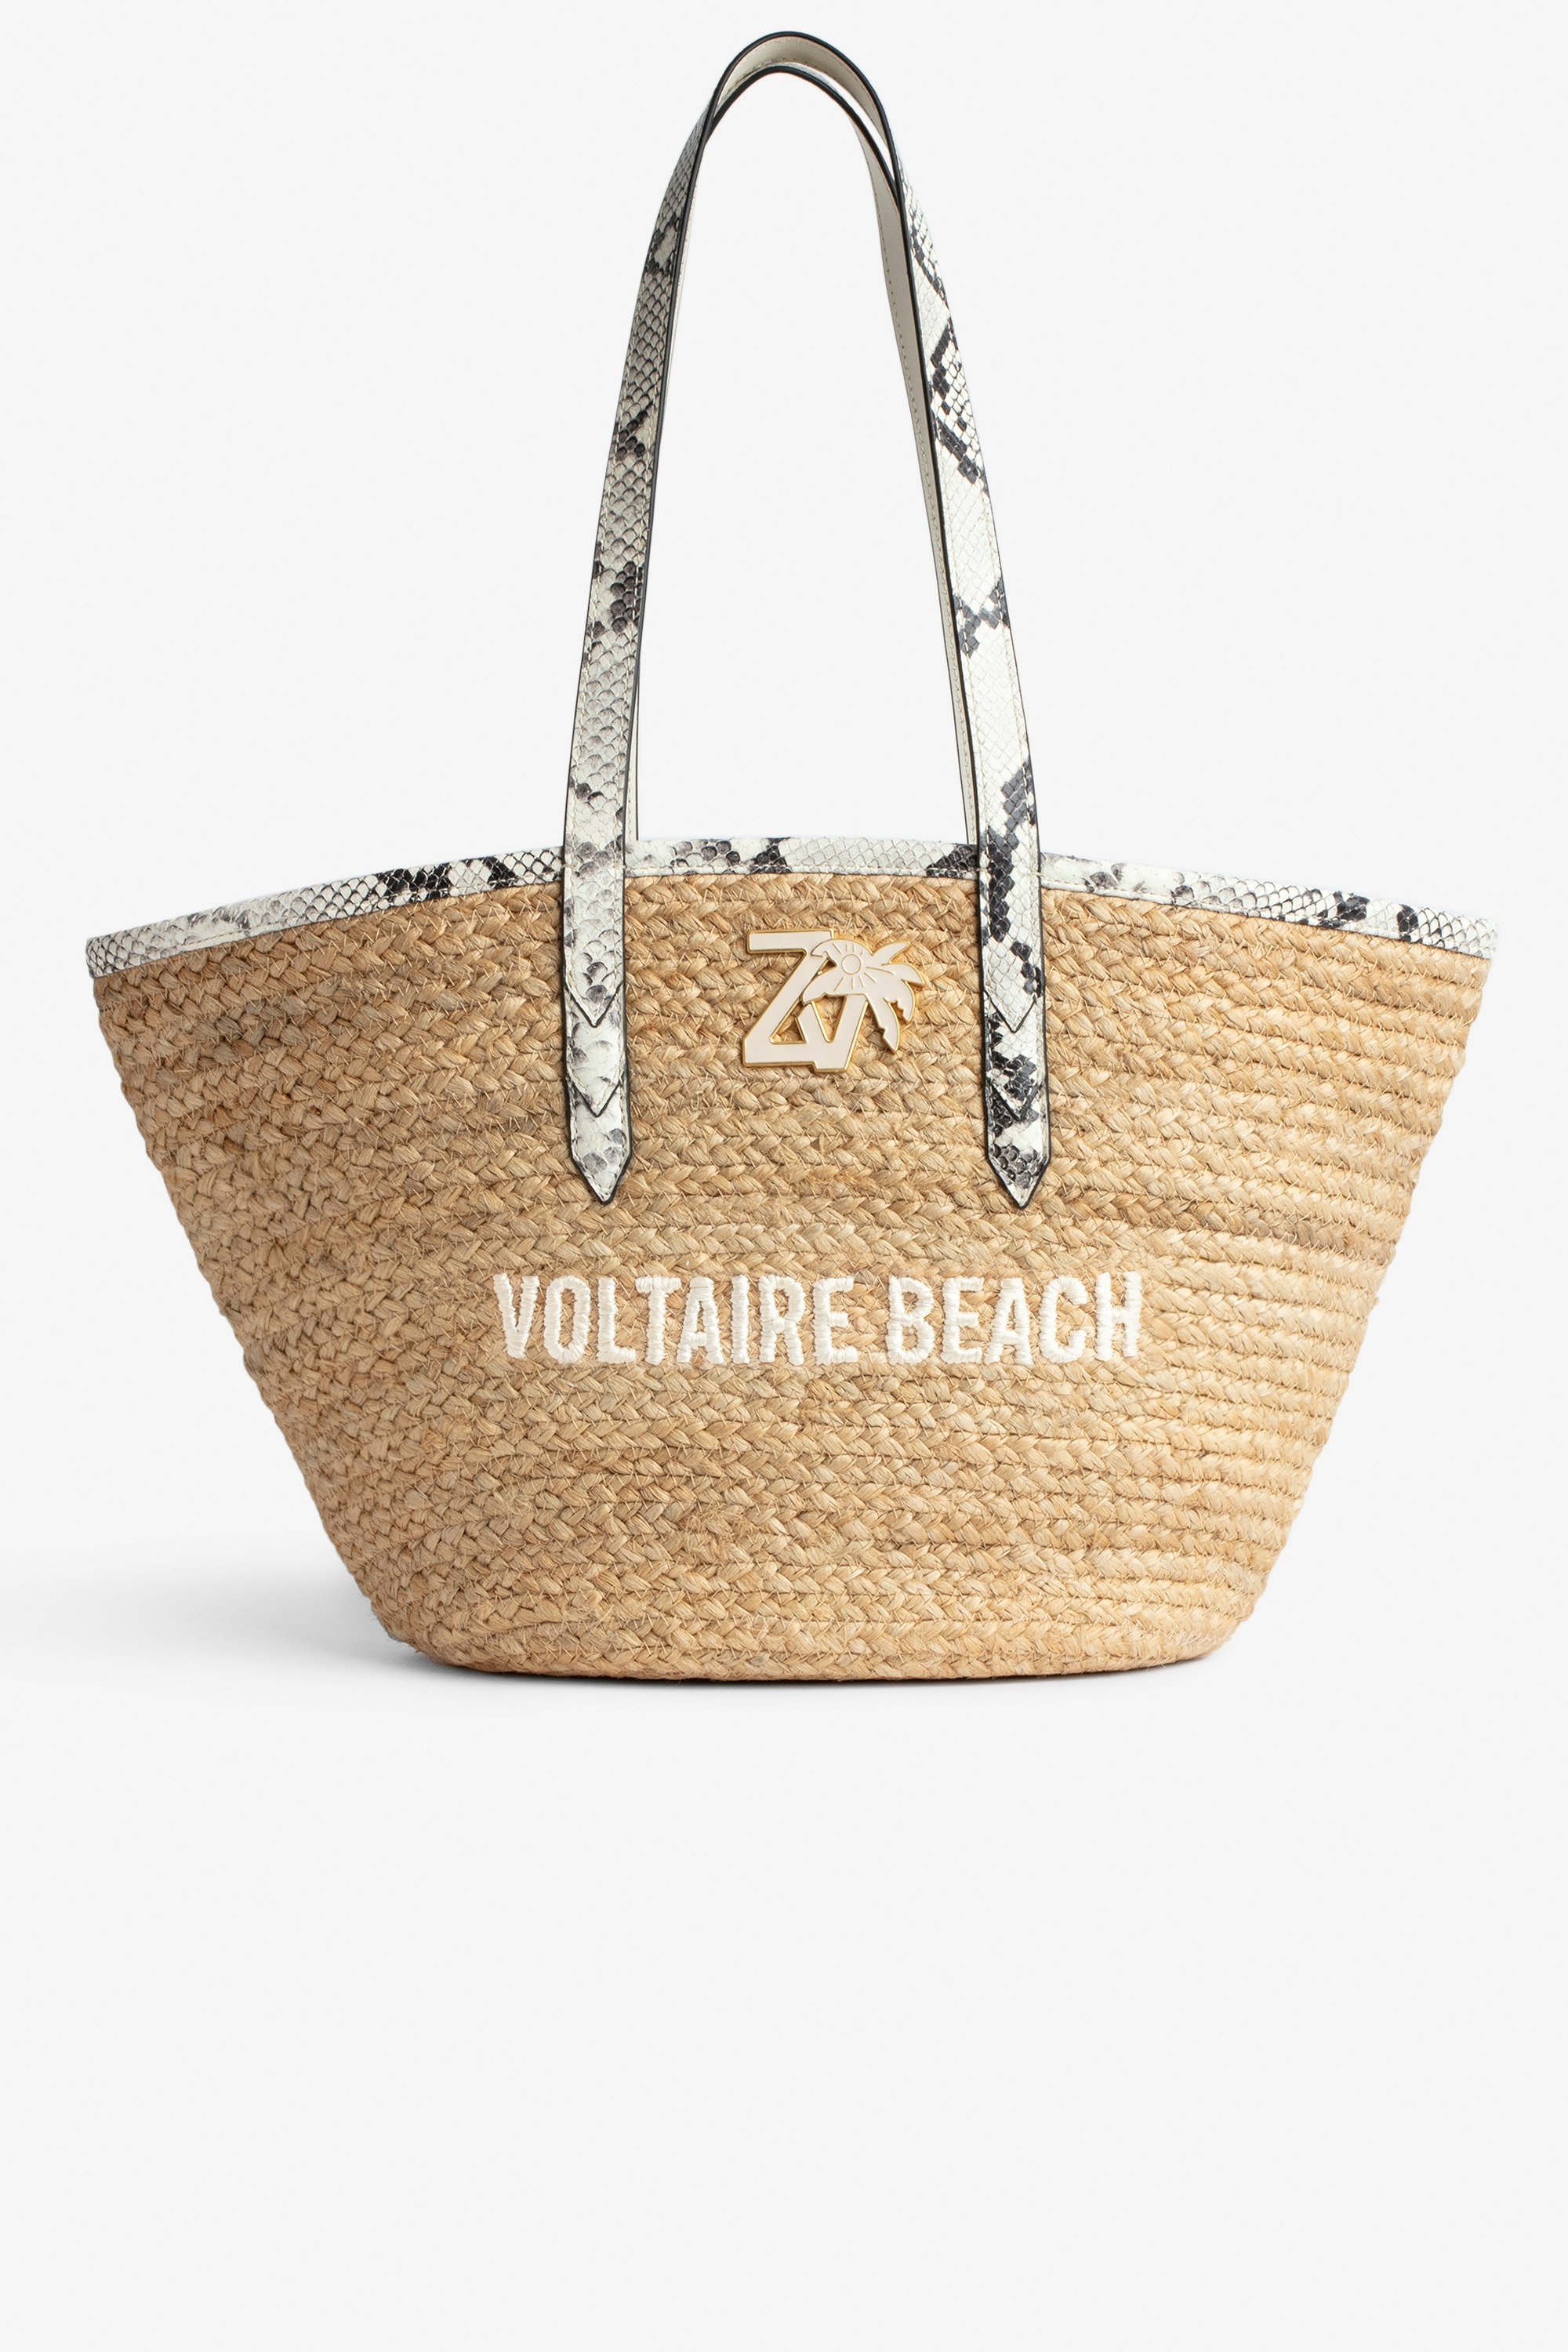 Le Beach バッグ パイソンエフェクト エクリュ レザーハンドル ストローバッグ 「Voltaire Beach」の刺繍とチャーム付き ZV レディース